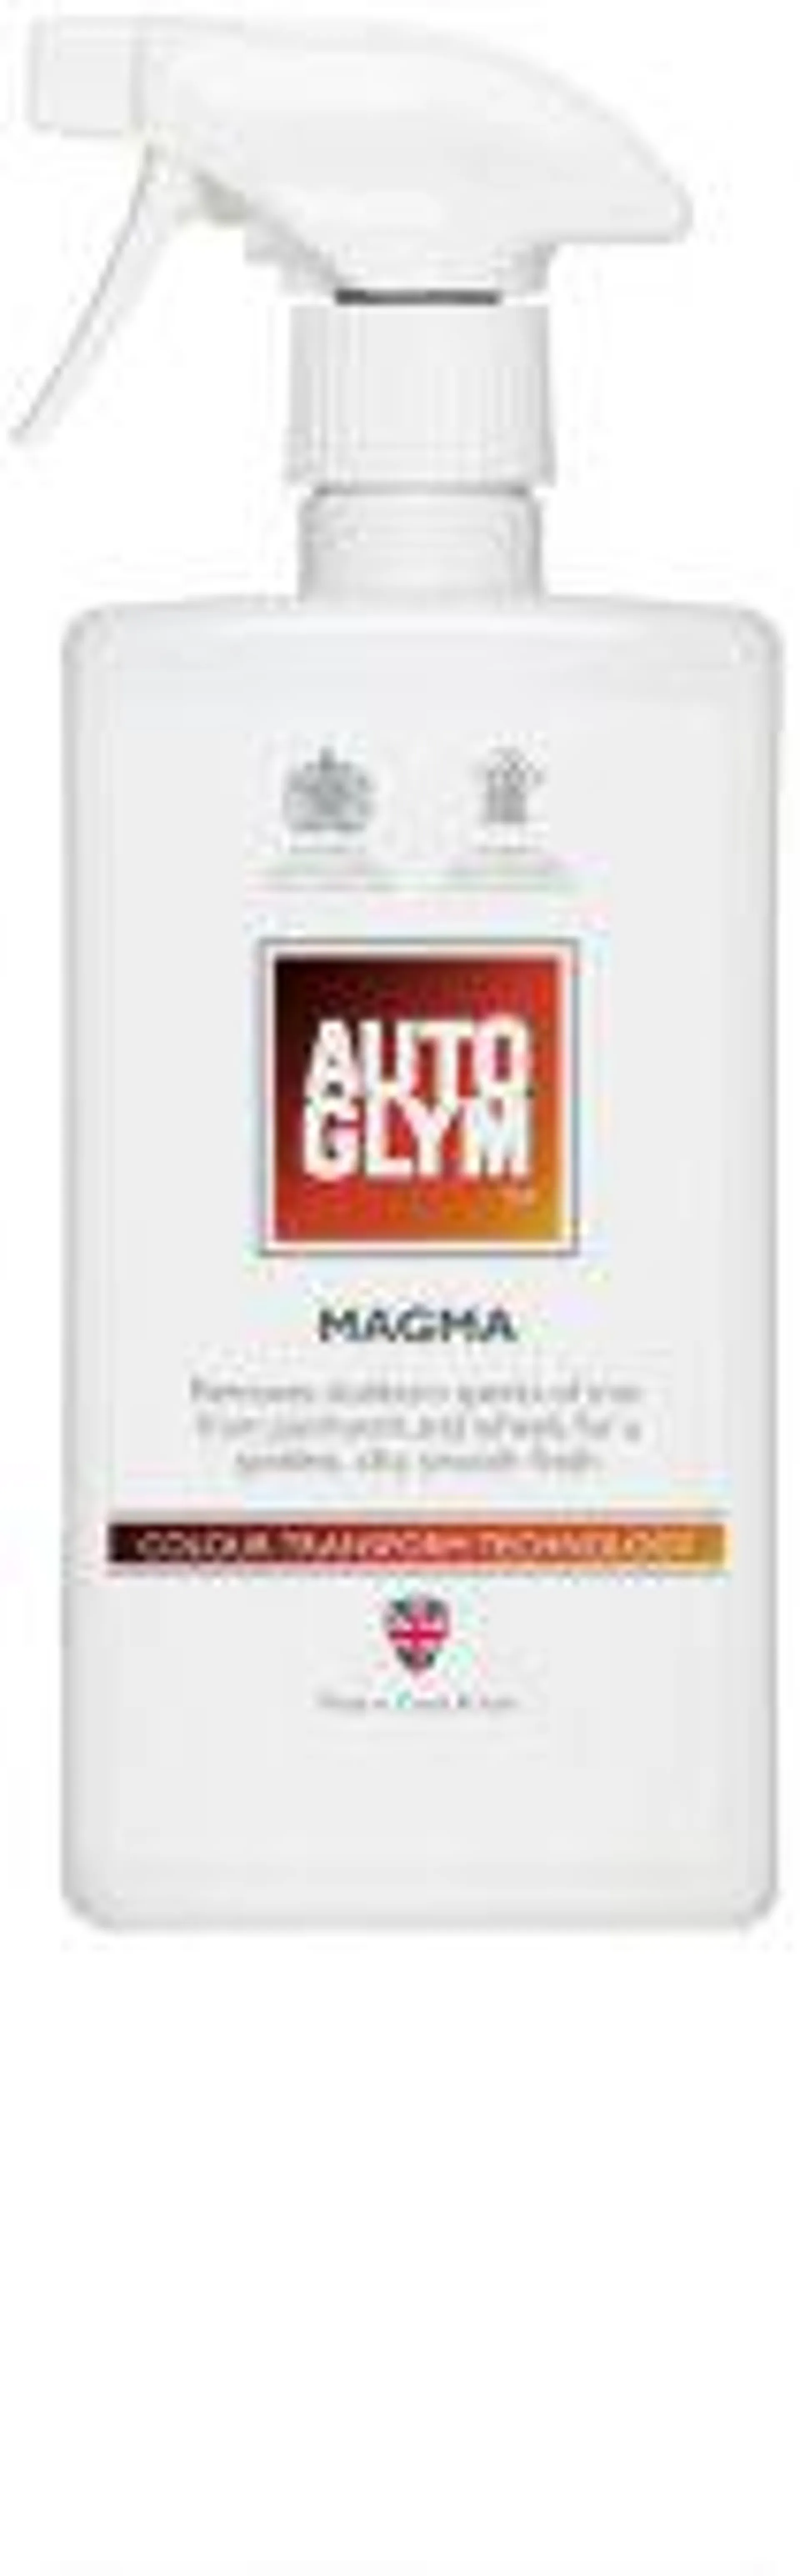 Autoglym Magma Liquid Clay - Flygrostlösare 500 ml